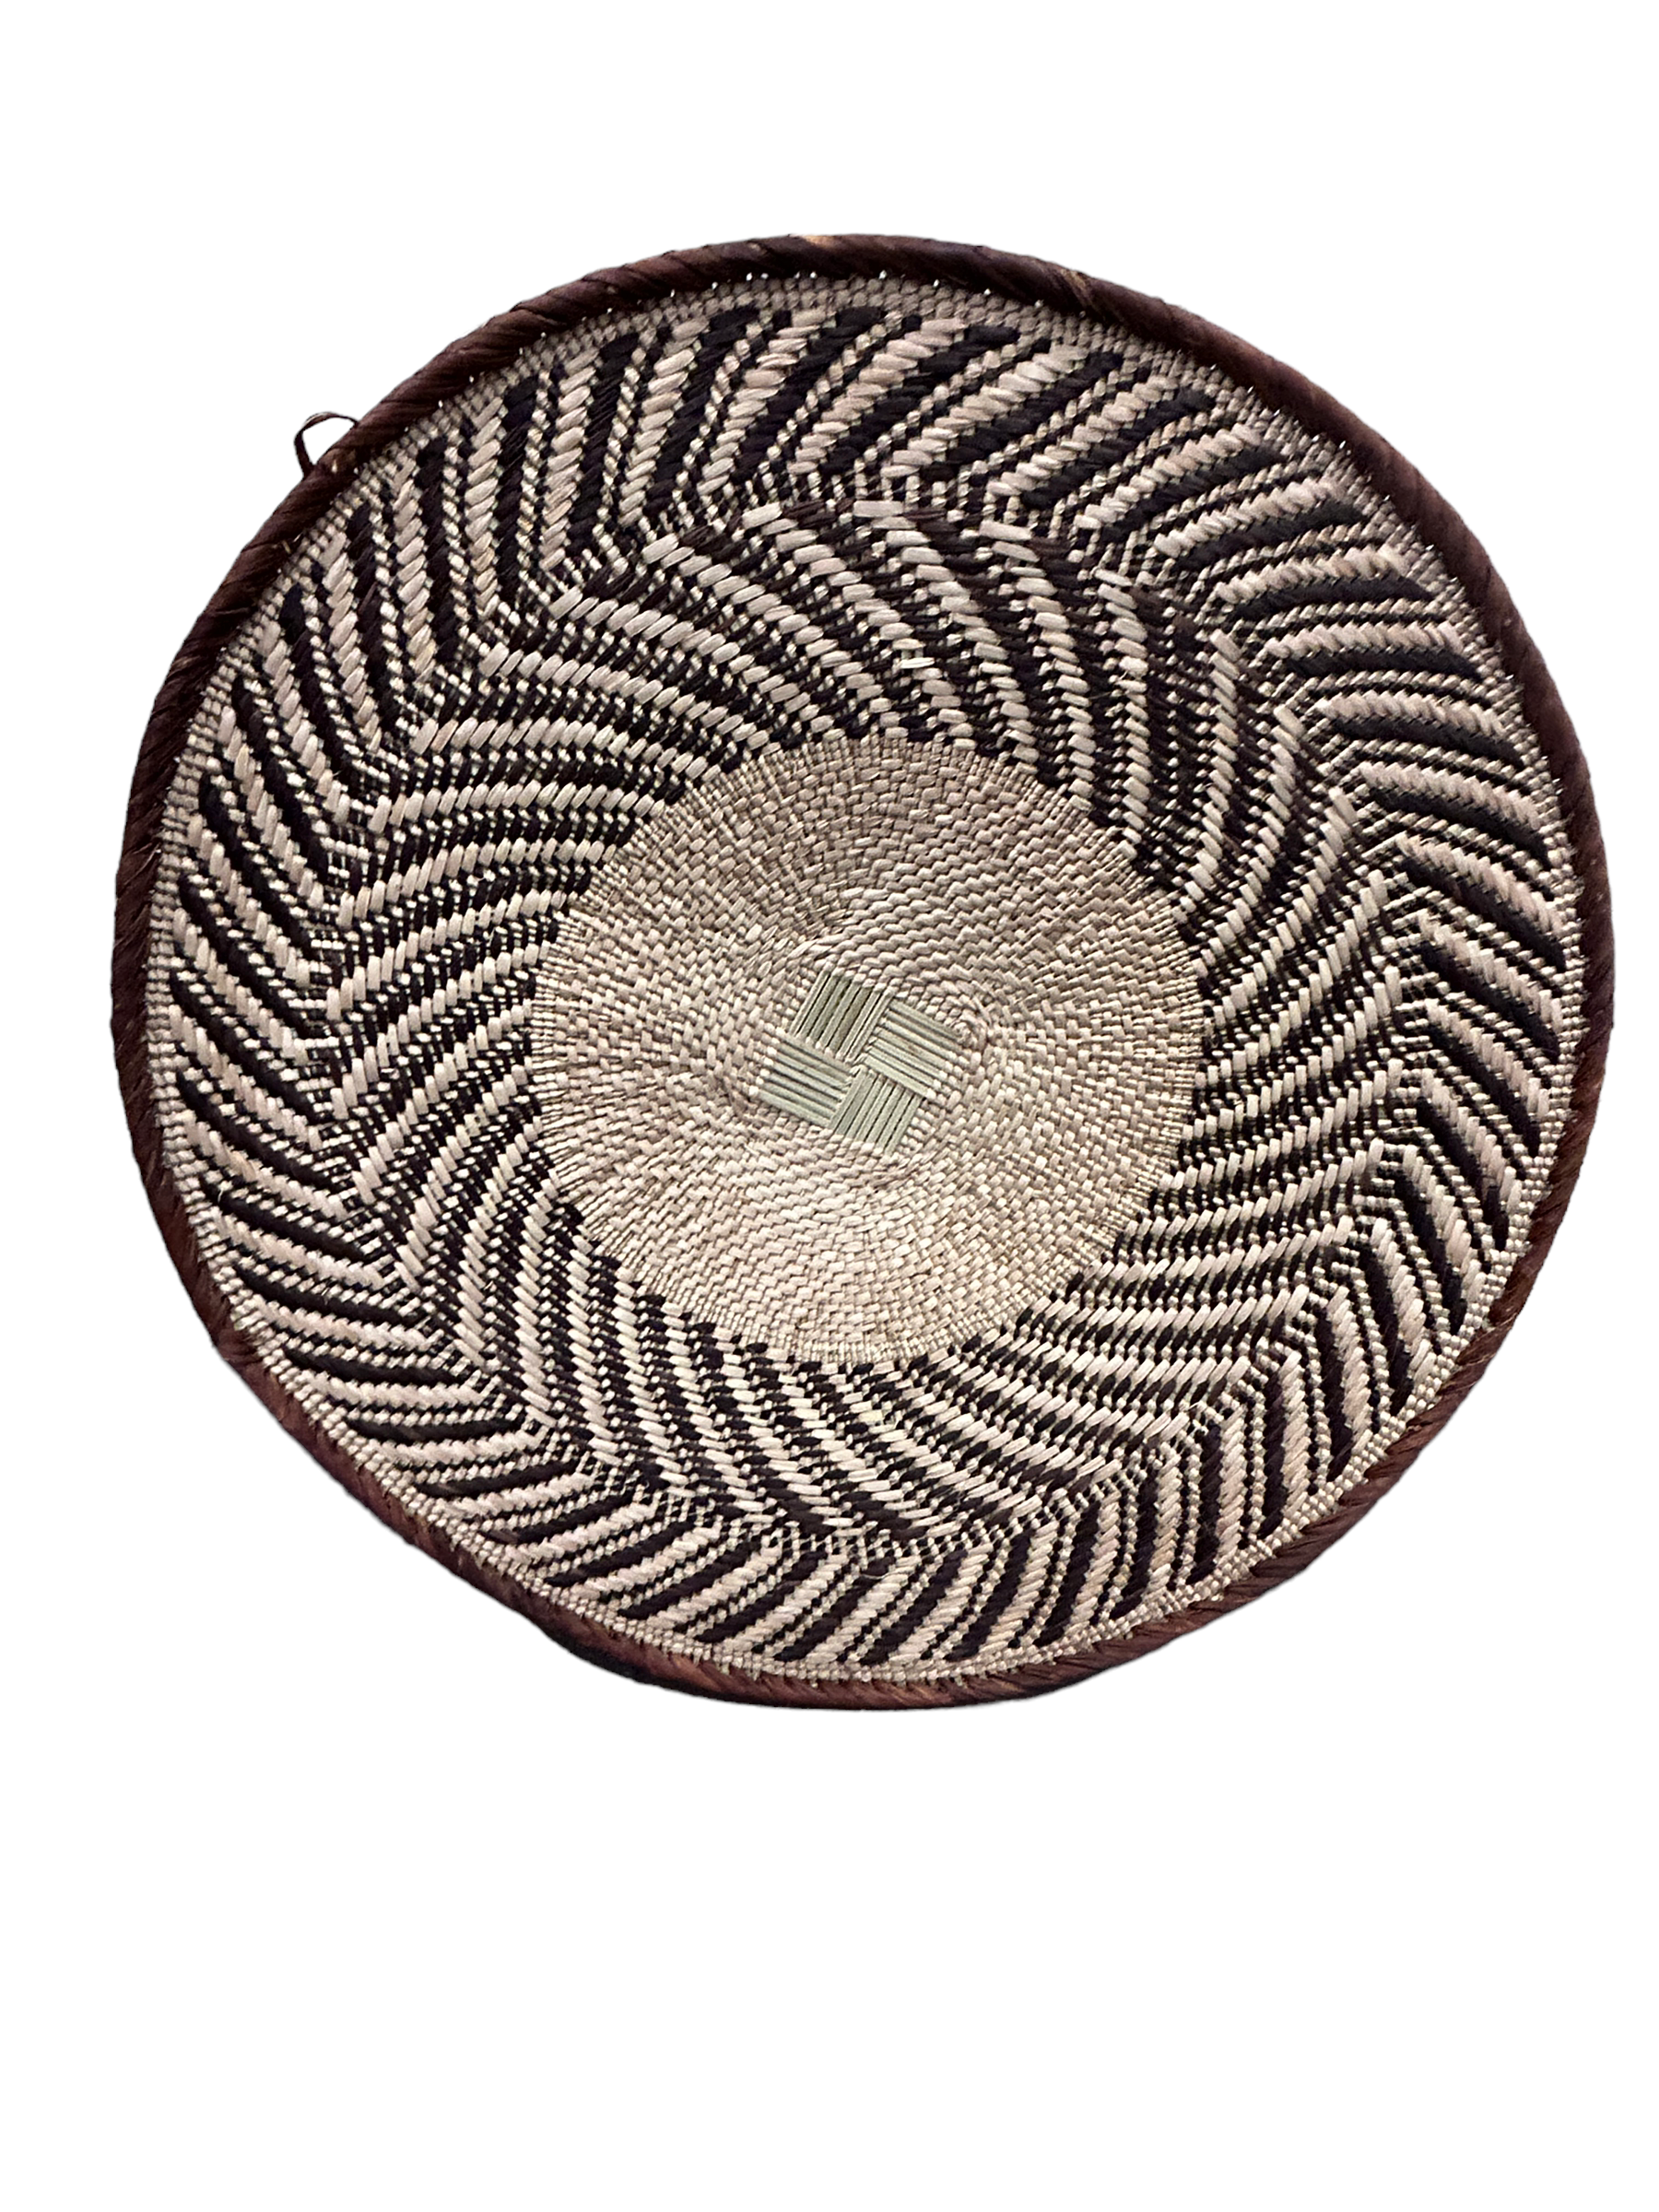 botanicalboysuk Tonga Basket Natural (45-12)